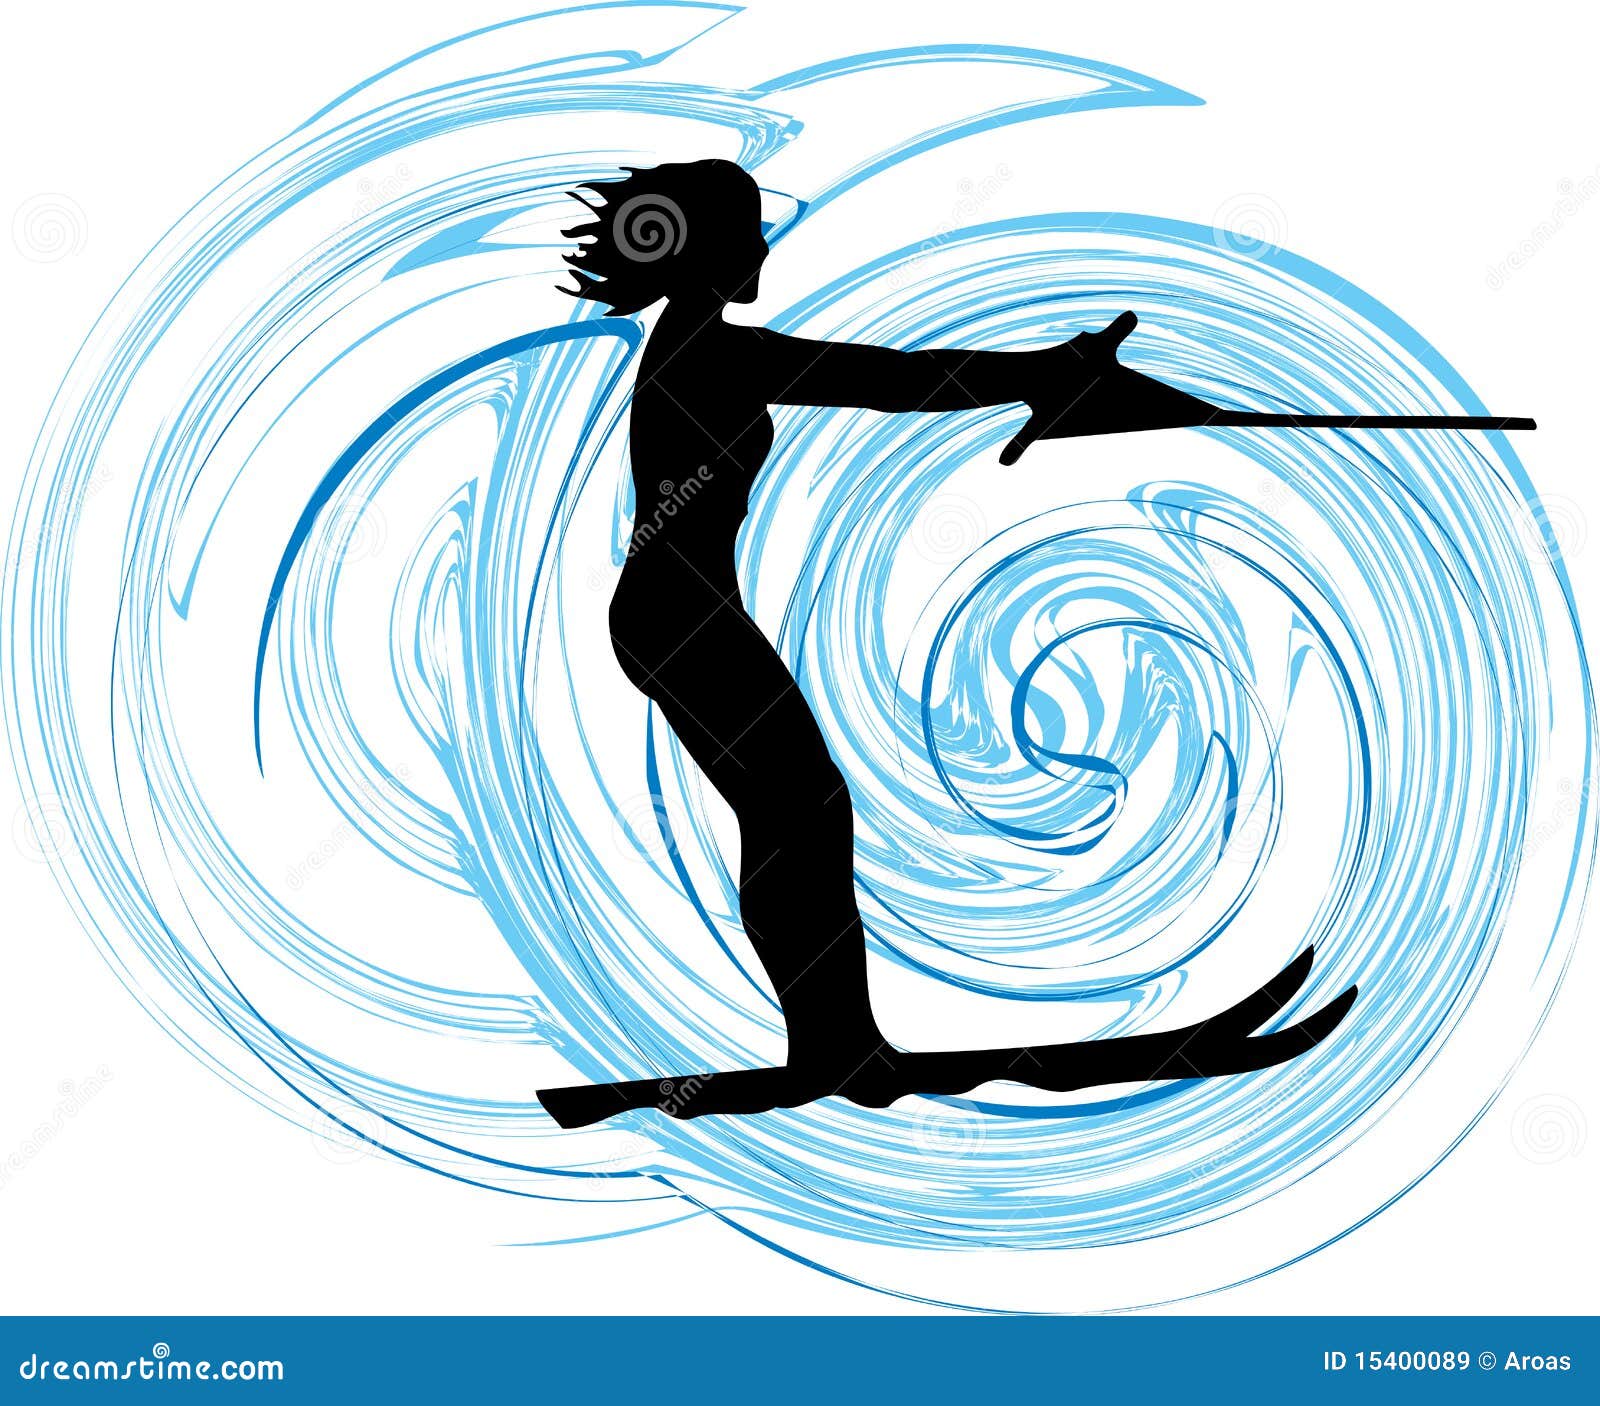 Water Skiing Woman Illustration 15400089 